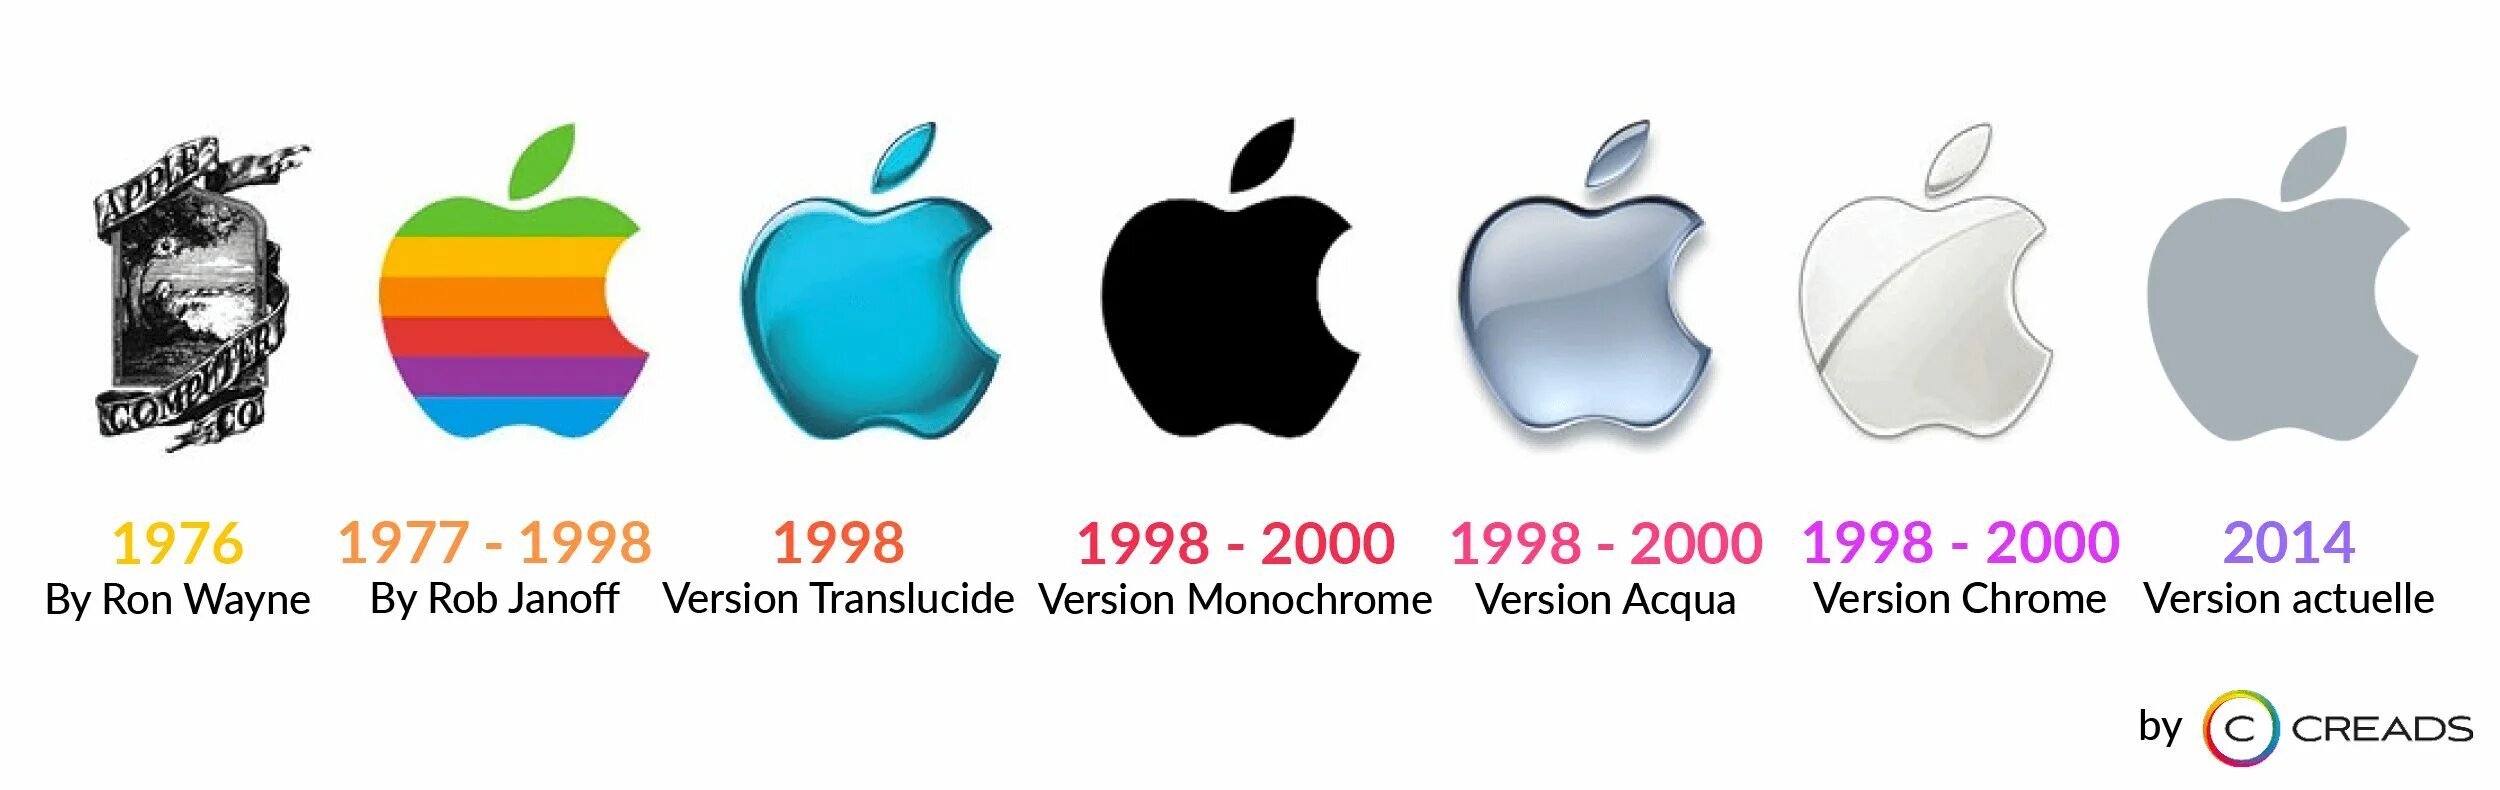 Создание логотип на айфоне. Знак Apple. Логотип компании Apple. Эволюция логотипа Apple. Apple яблоко логотип.